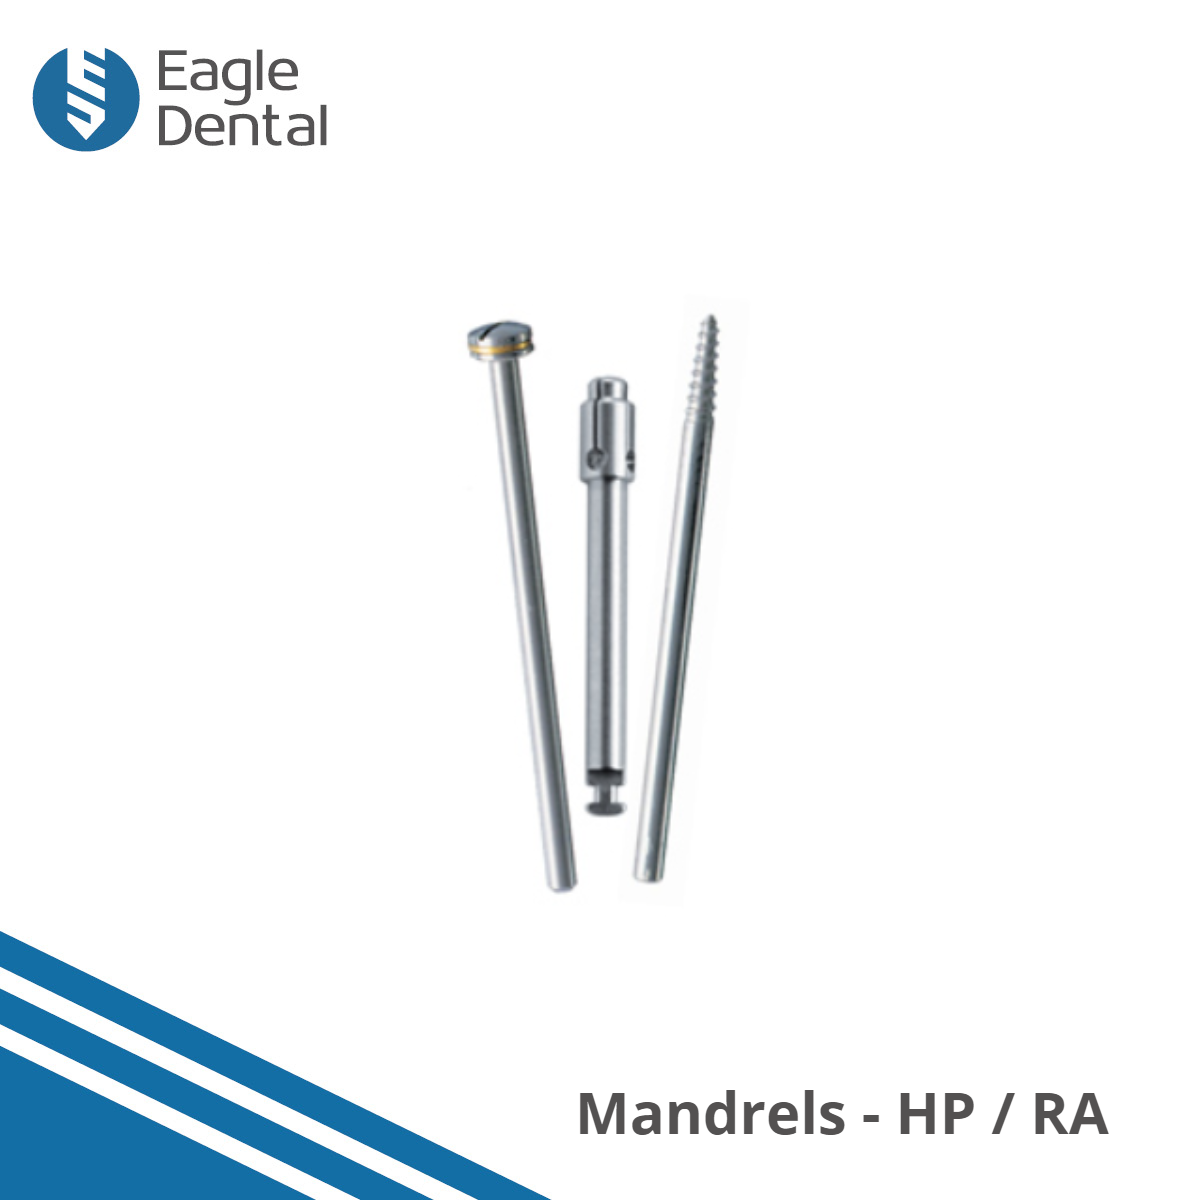 Mandrels - HP / RA